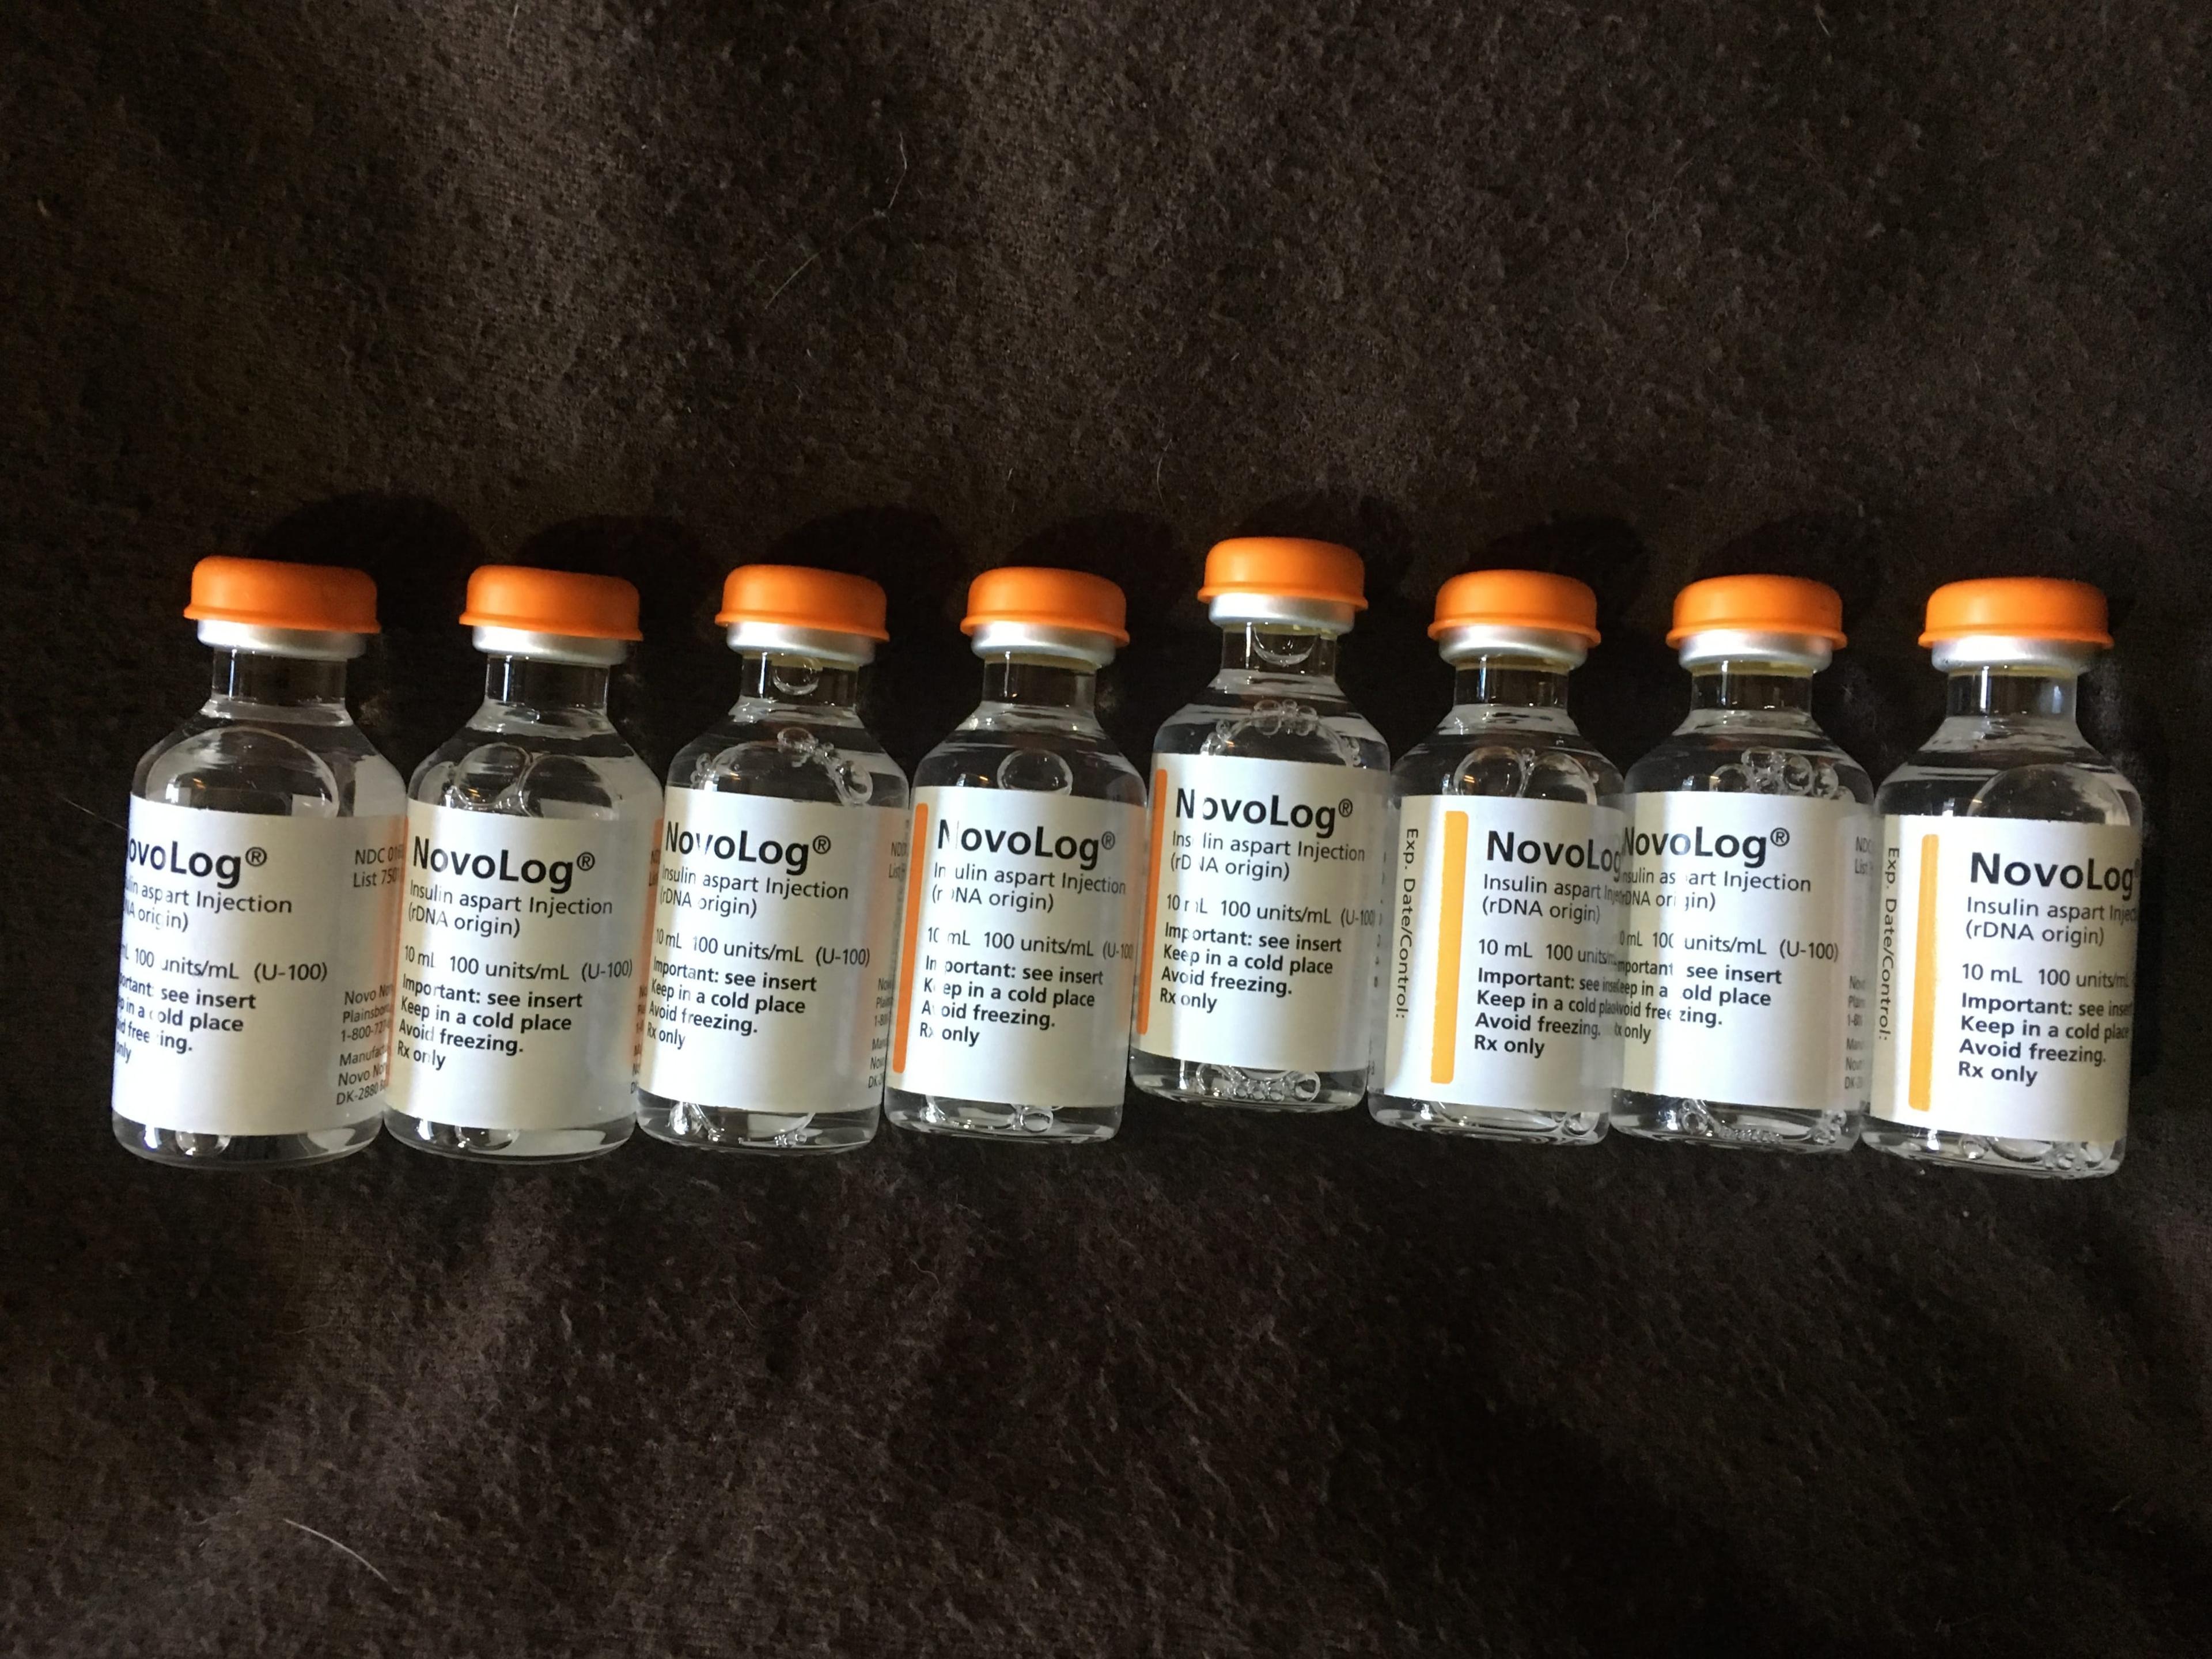 Insulin prescription bottles